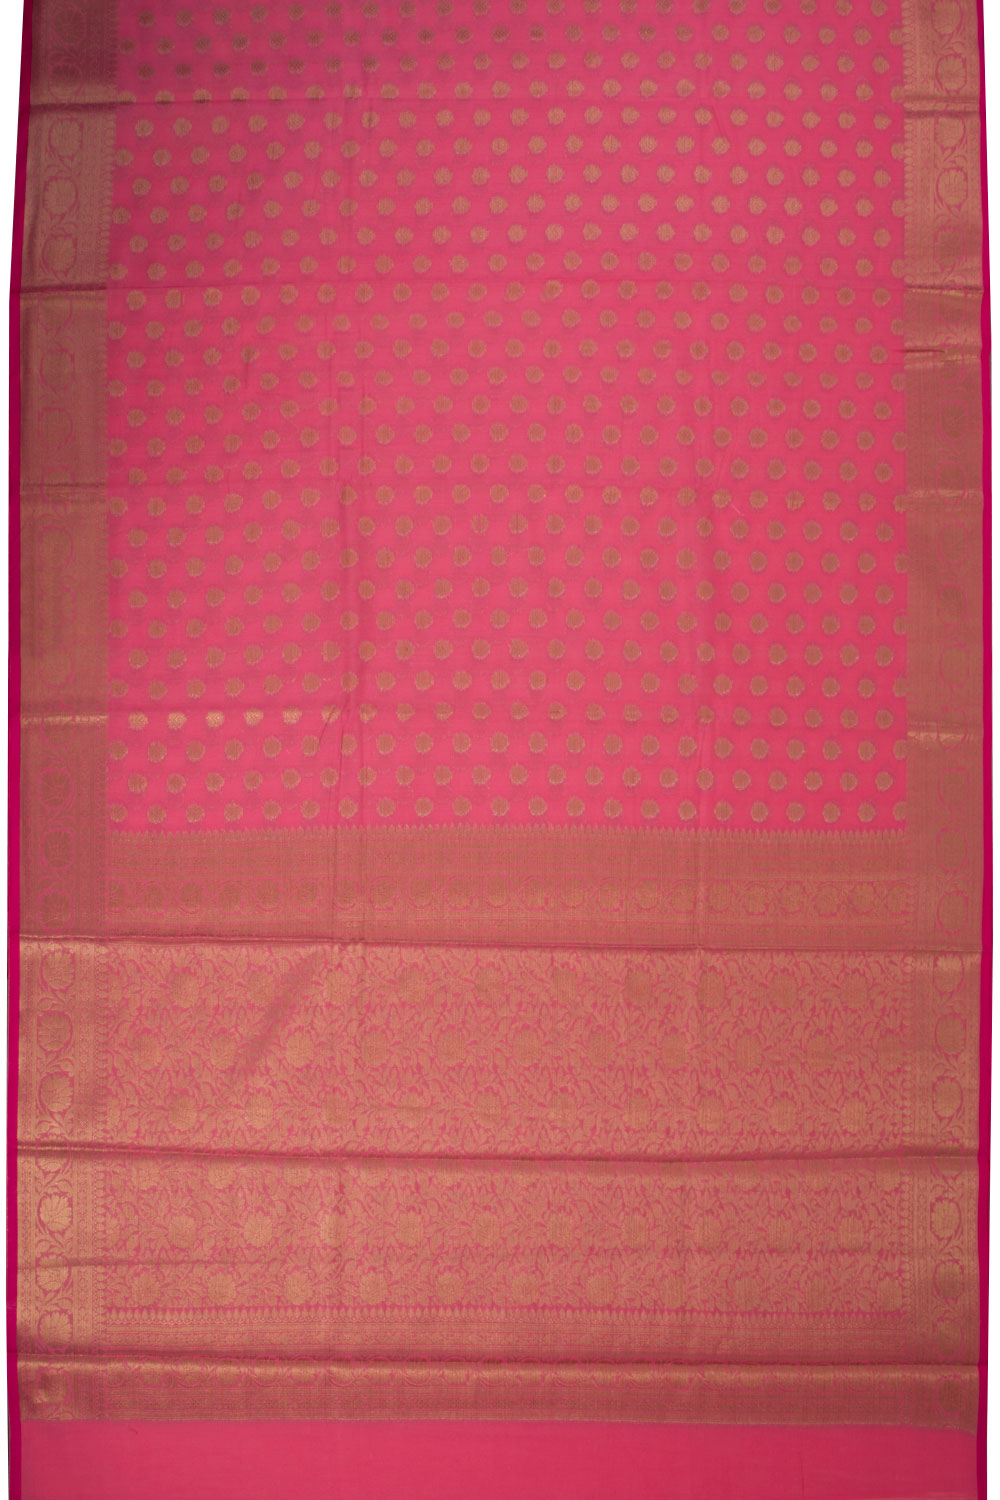 Pink Handloom Banarasi Cotton Saree 10068891 - Avishya